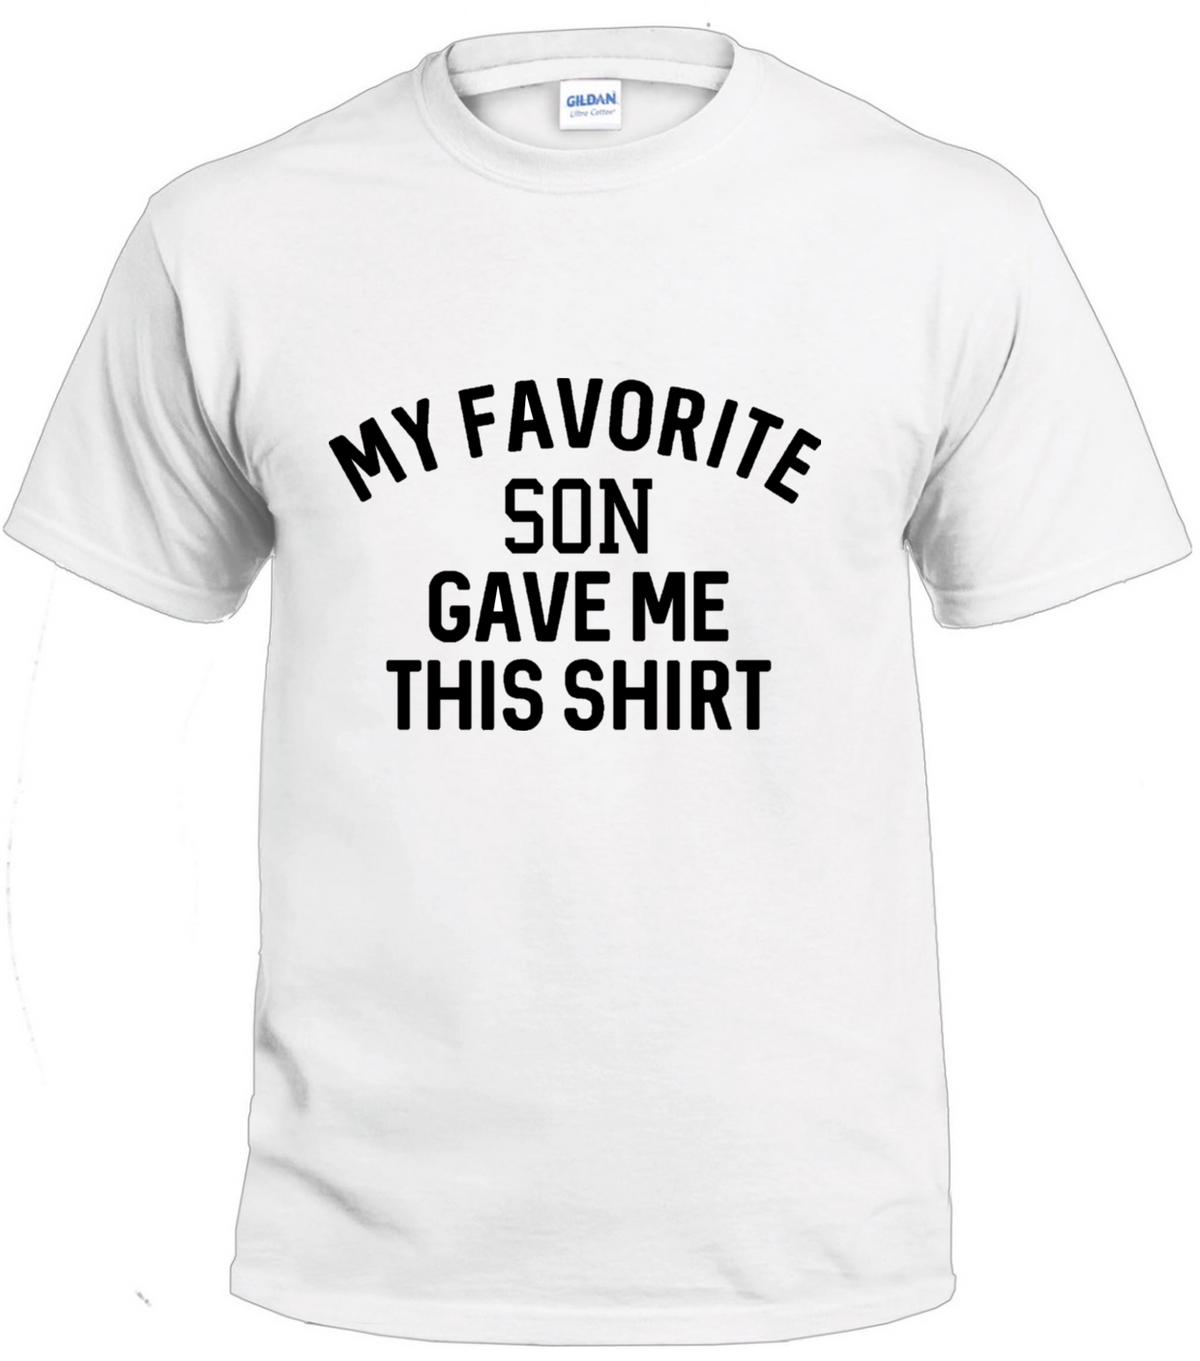 My Favorite Son Gave Me This Shirt t-shirt